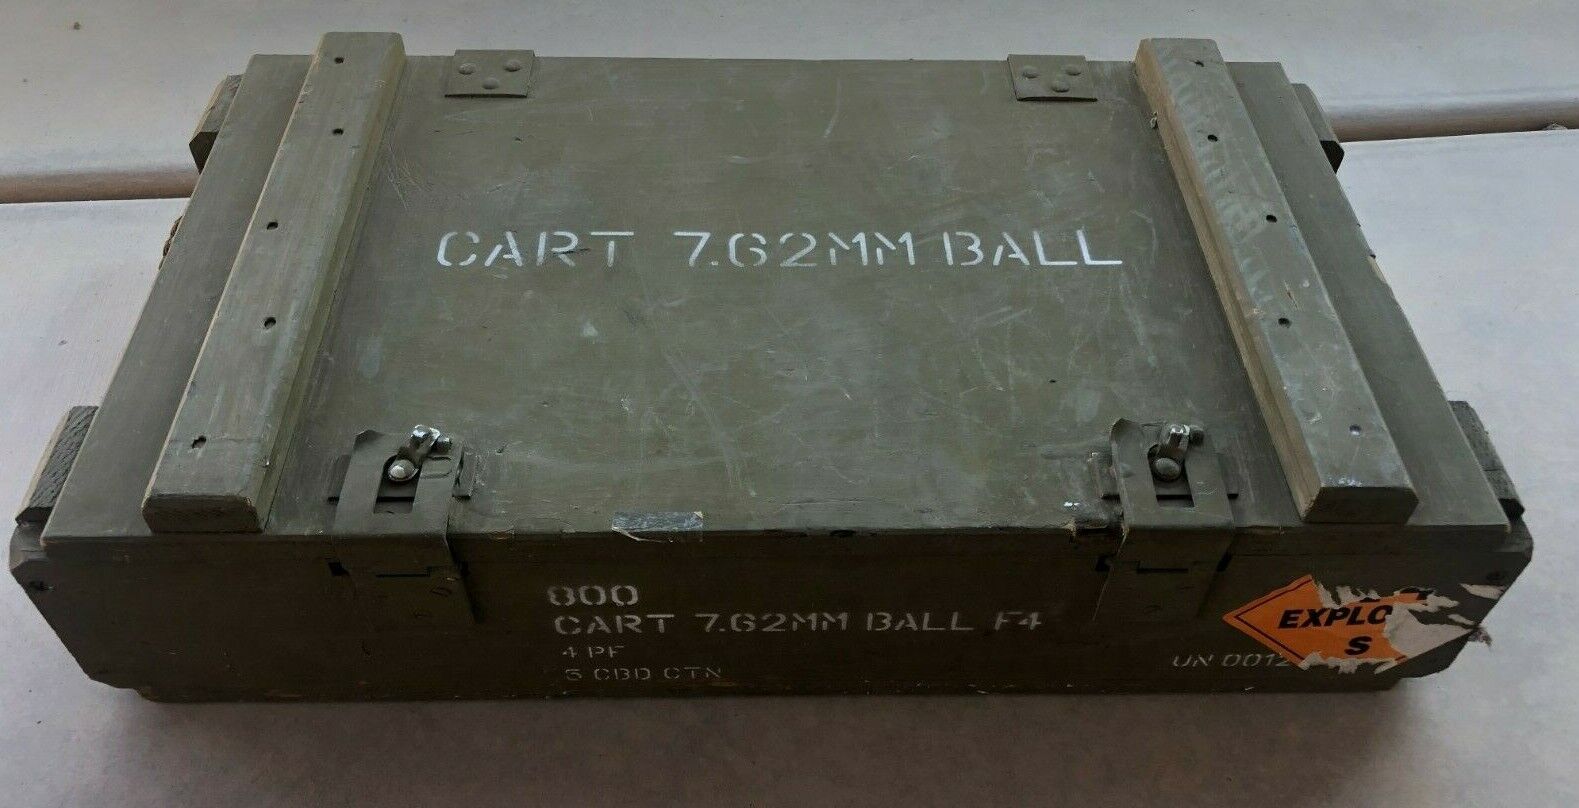 cart 7.62mm ball Ammo wooden crate ammunition box only